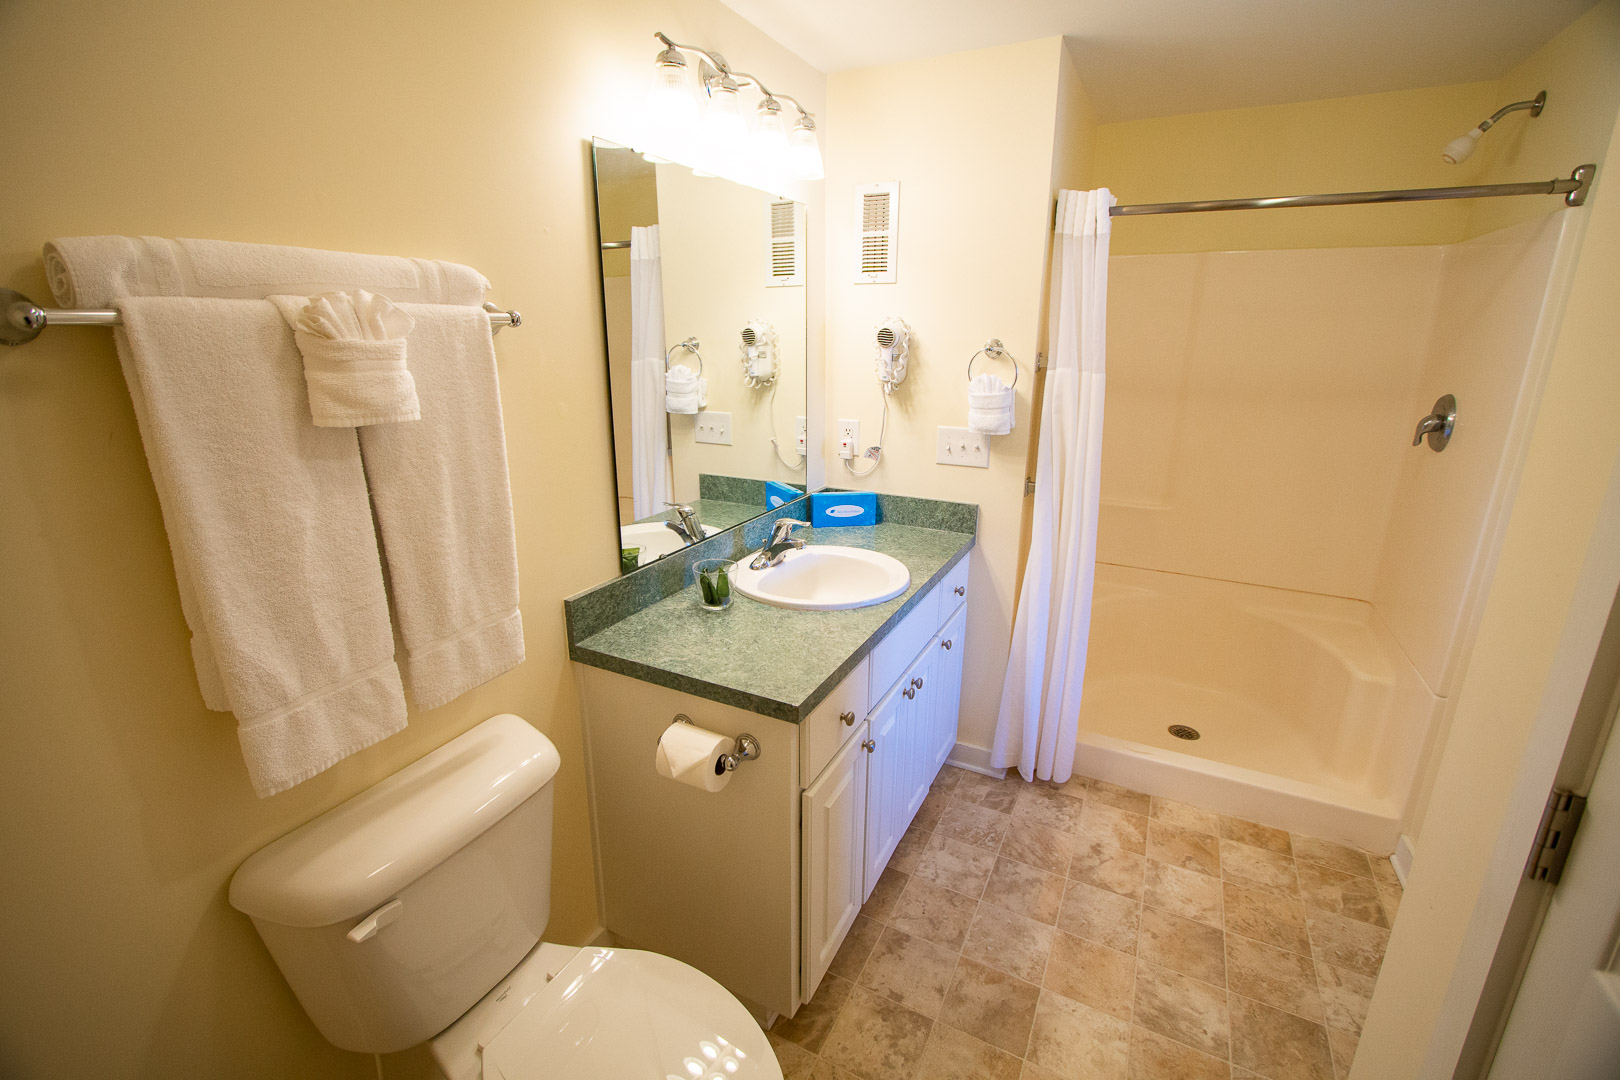 A clean bathroom at VRI's Sandcastle Village in New Bern, North Carolina.